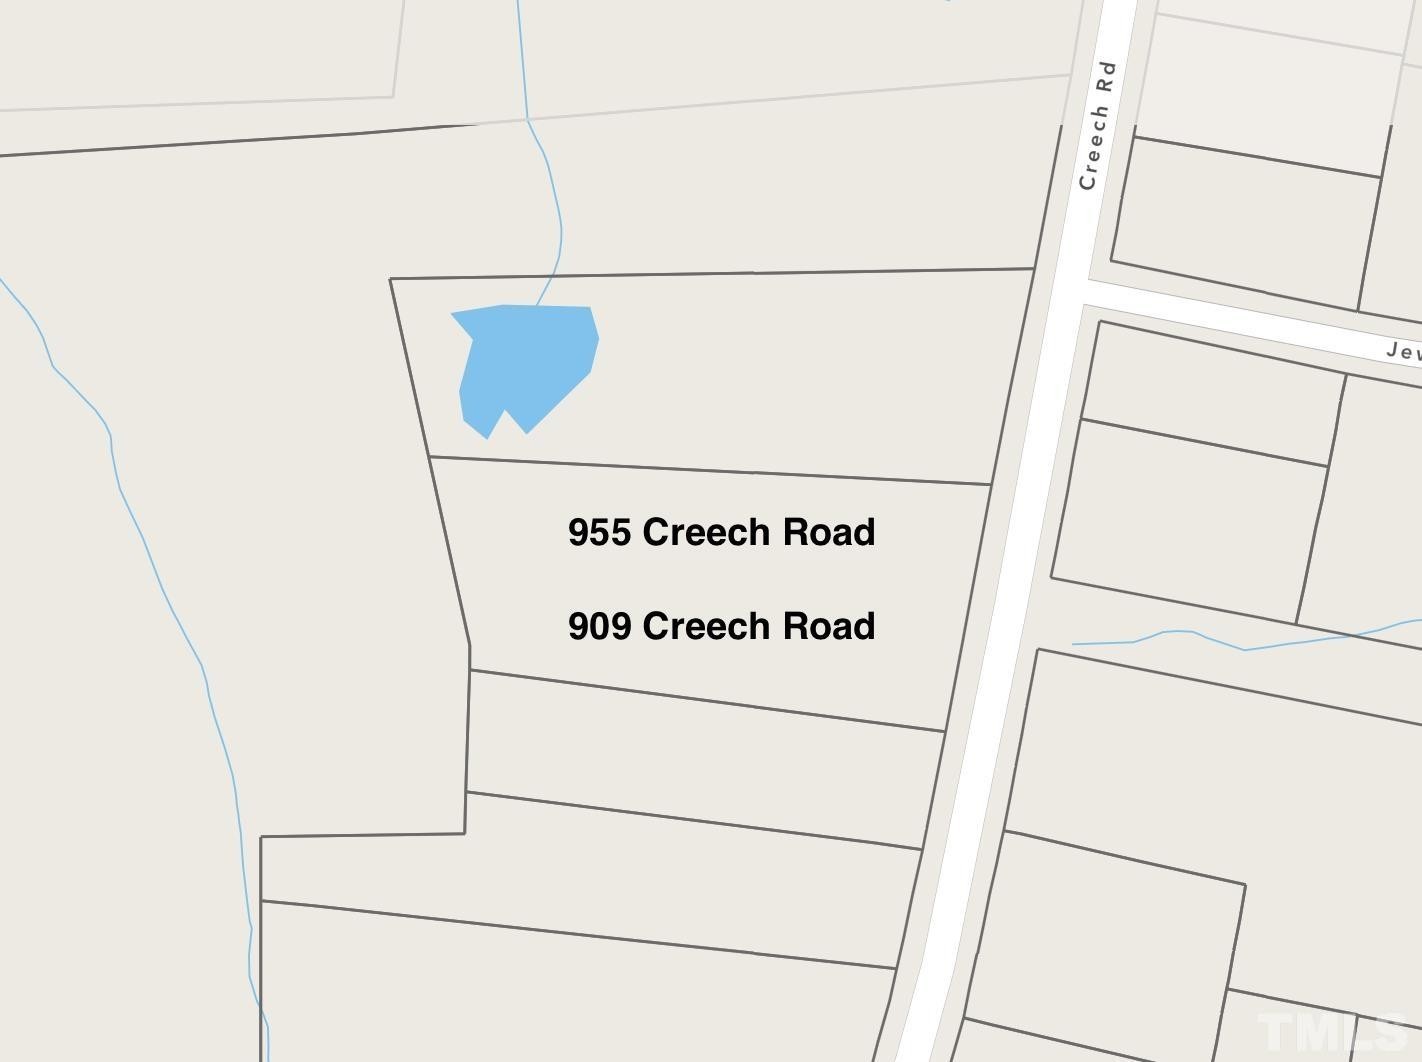 2. 909 Creech Road